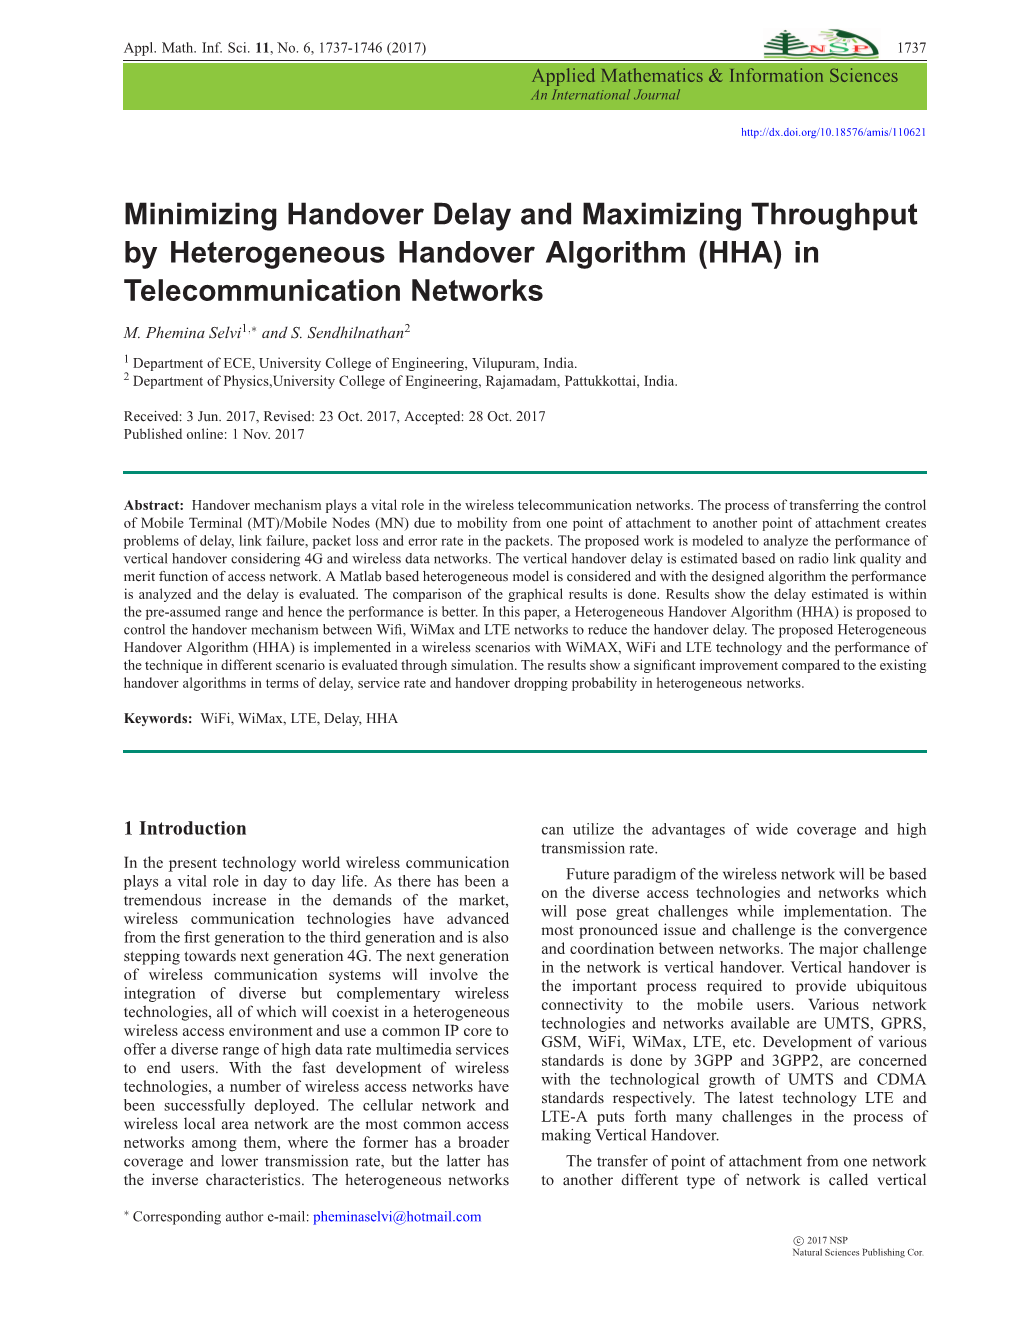 Minimizing Handover Delay and Maximizing Throughput by Heterogeneous Handover Algorithm (HHA) in Telecommunication Networks